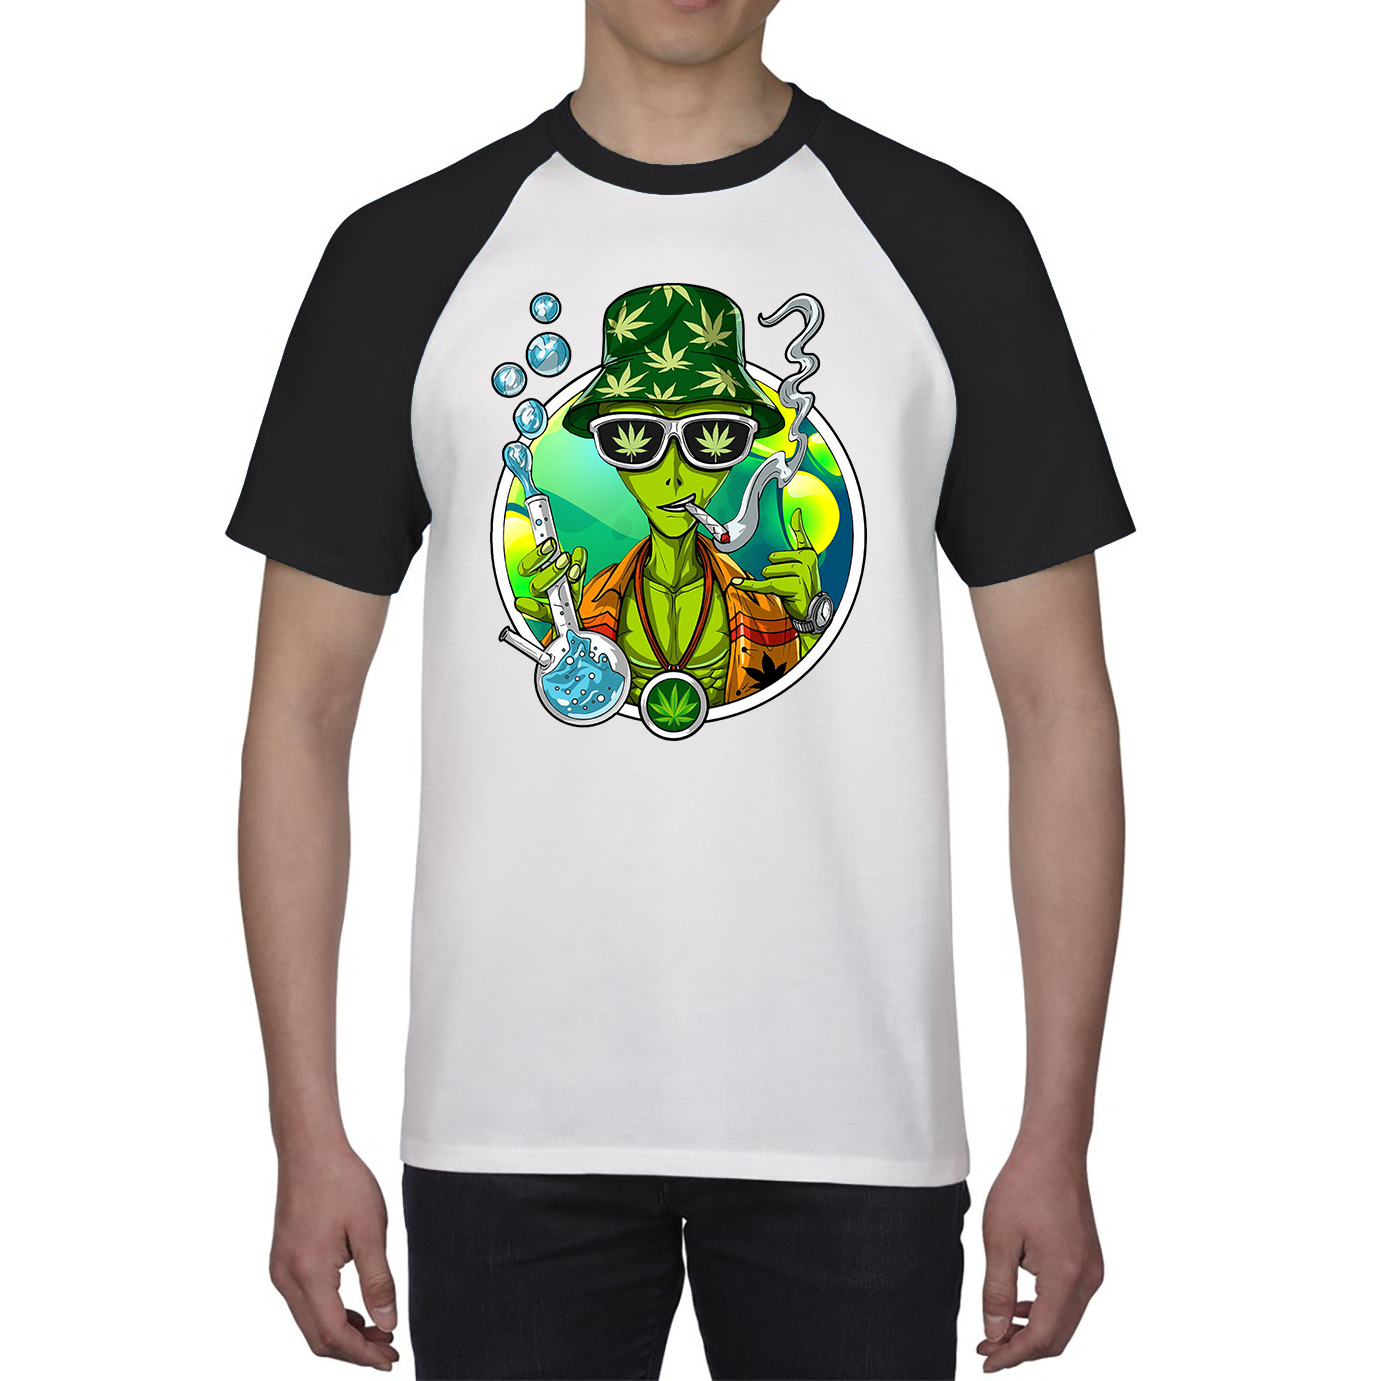 Weed Alien Stoner Shirt Marijuana, Cannabis Lovers Funny Joke Baseball T Shirt